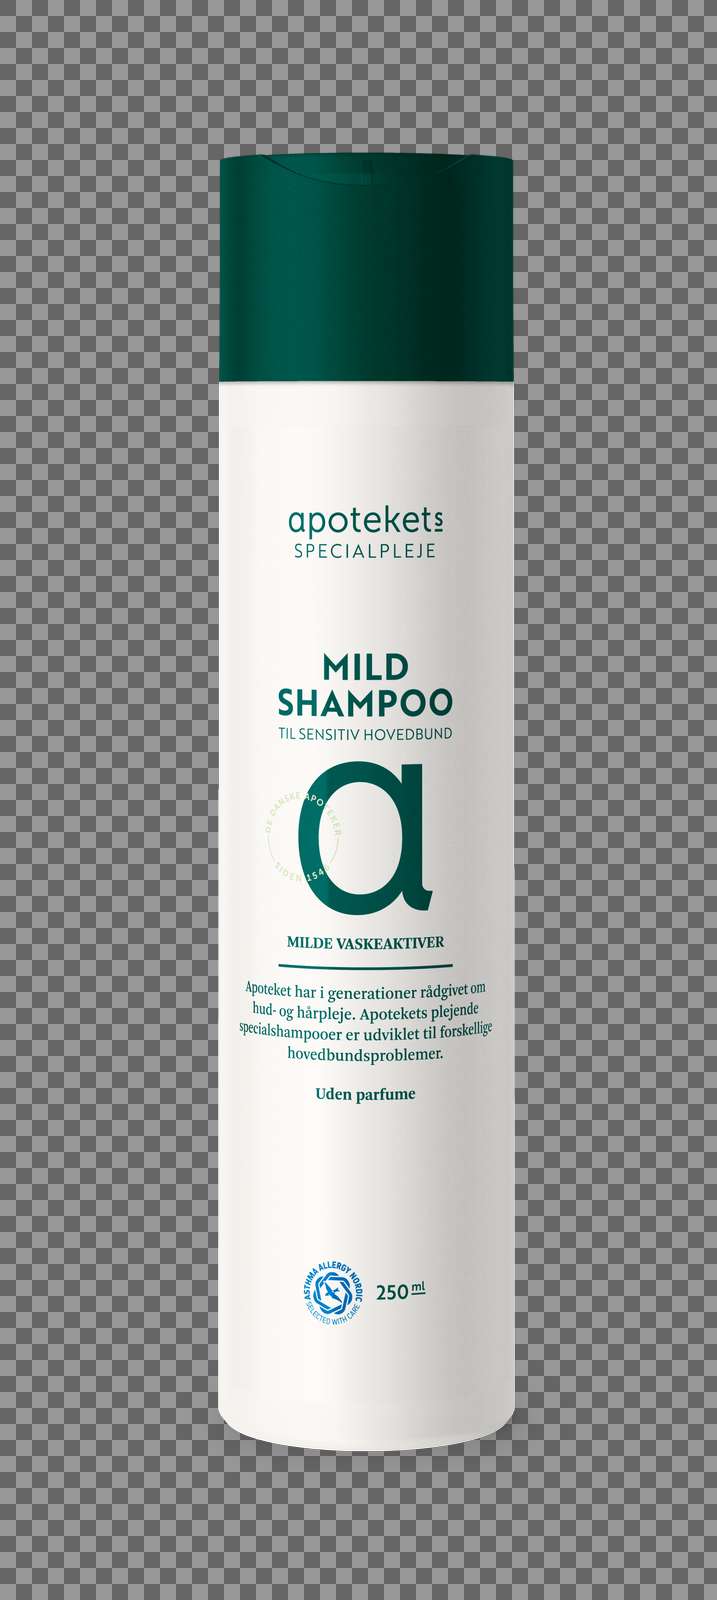 Mild-shampoo-250-ml-apotekets.psd